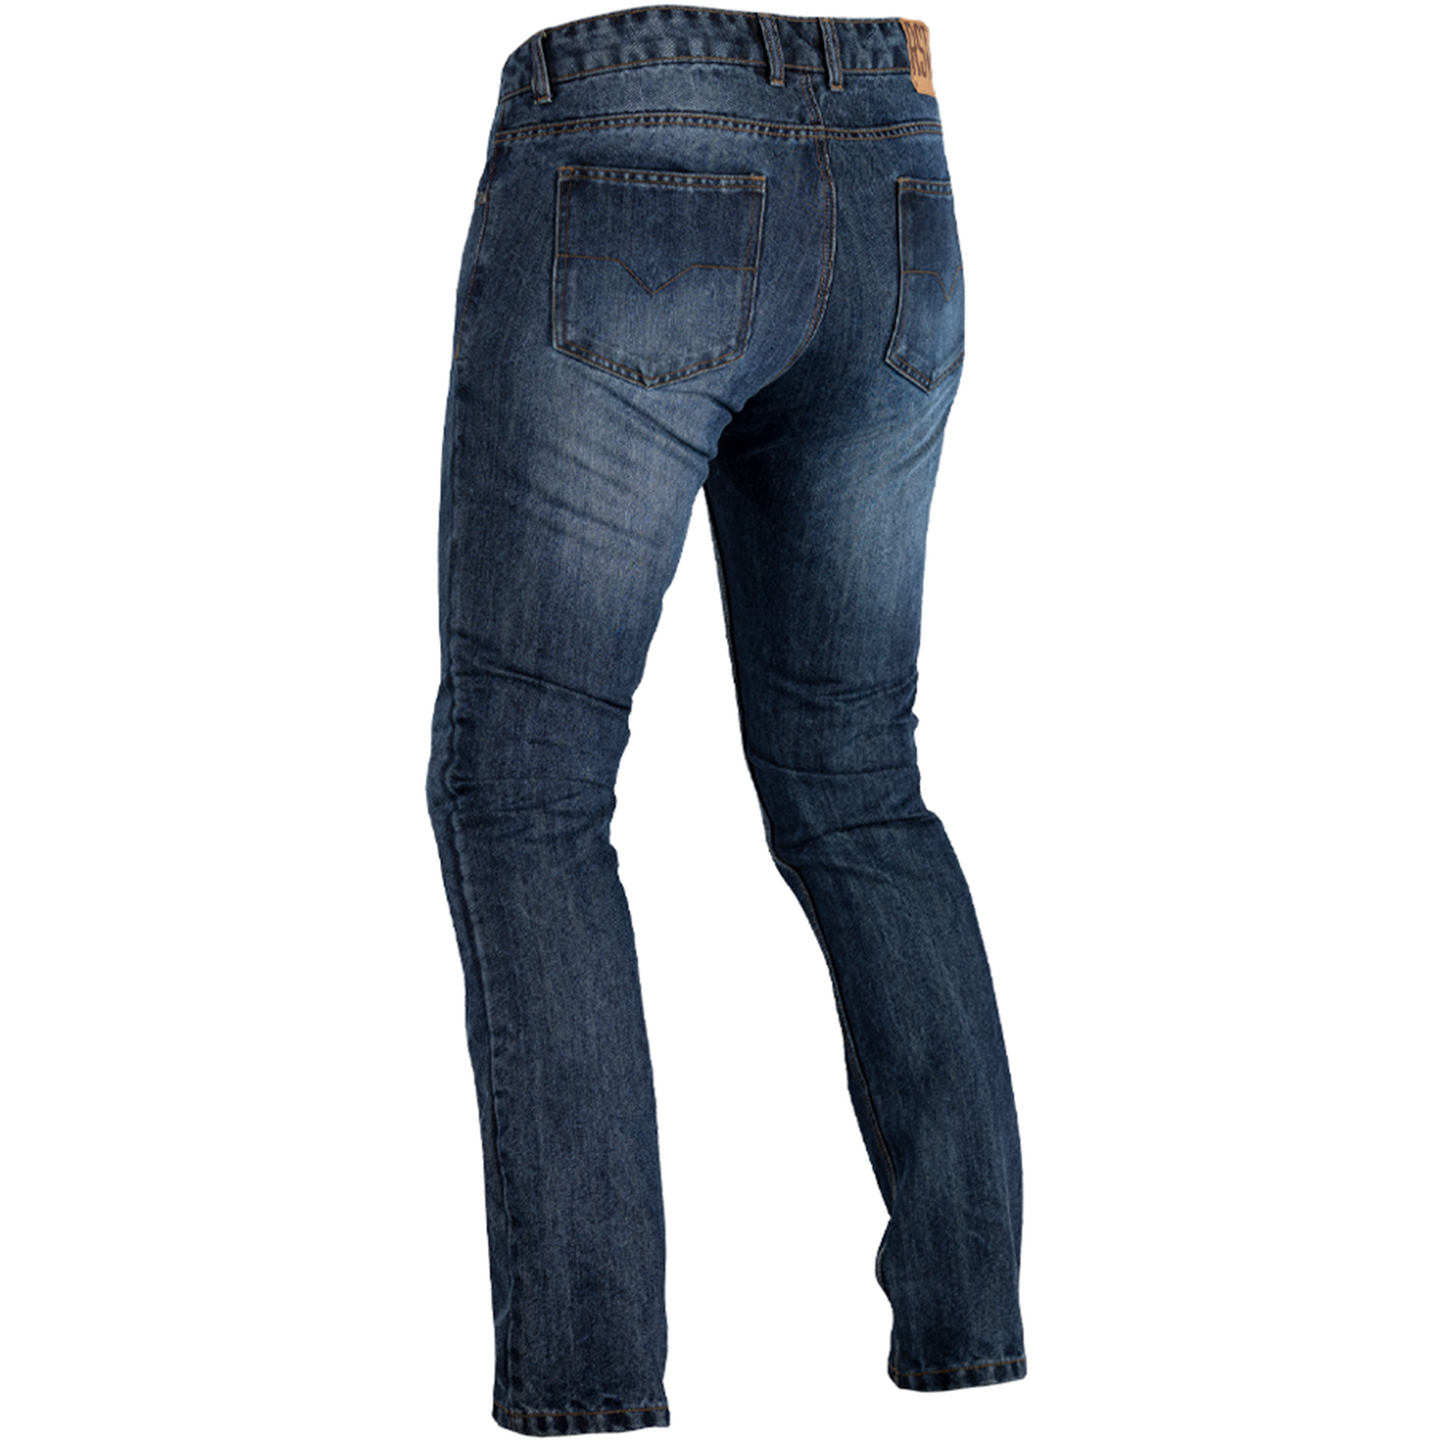 RST Single Layer Reinforced CE Jeans - Industrial Blue - Regular Leg